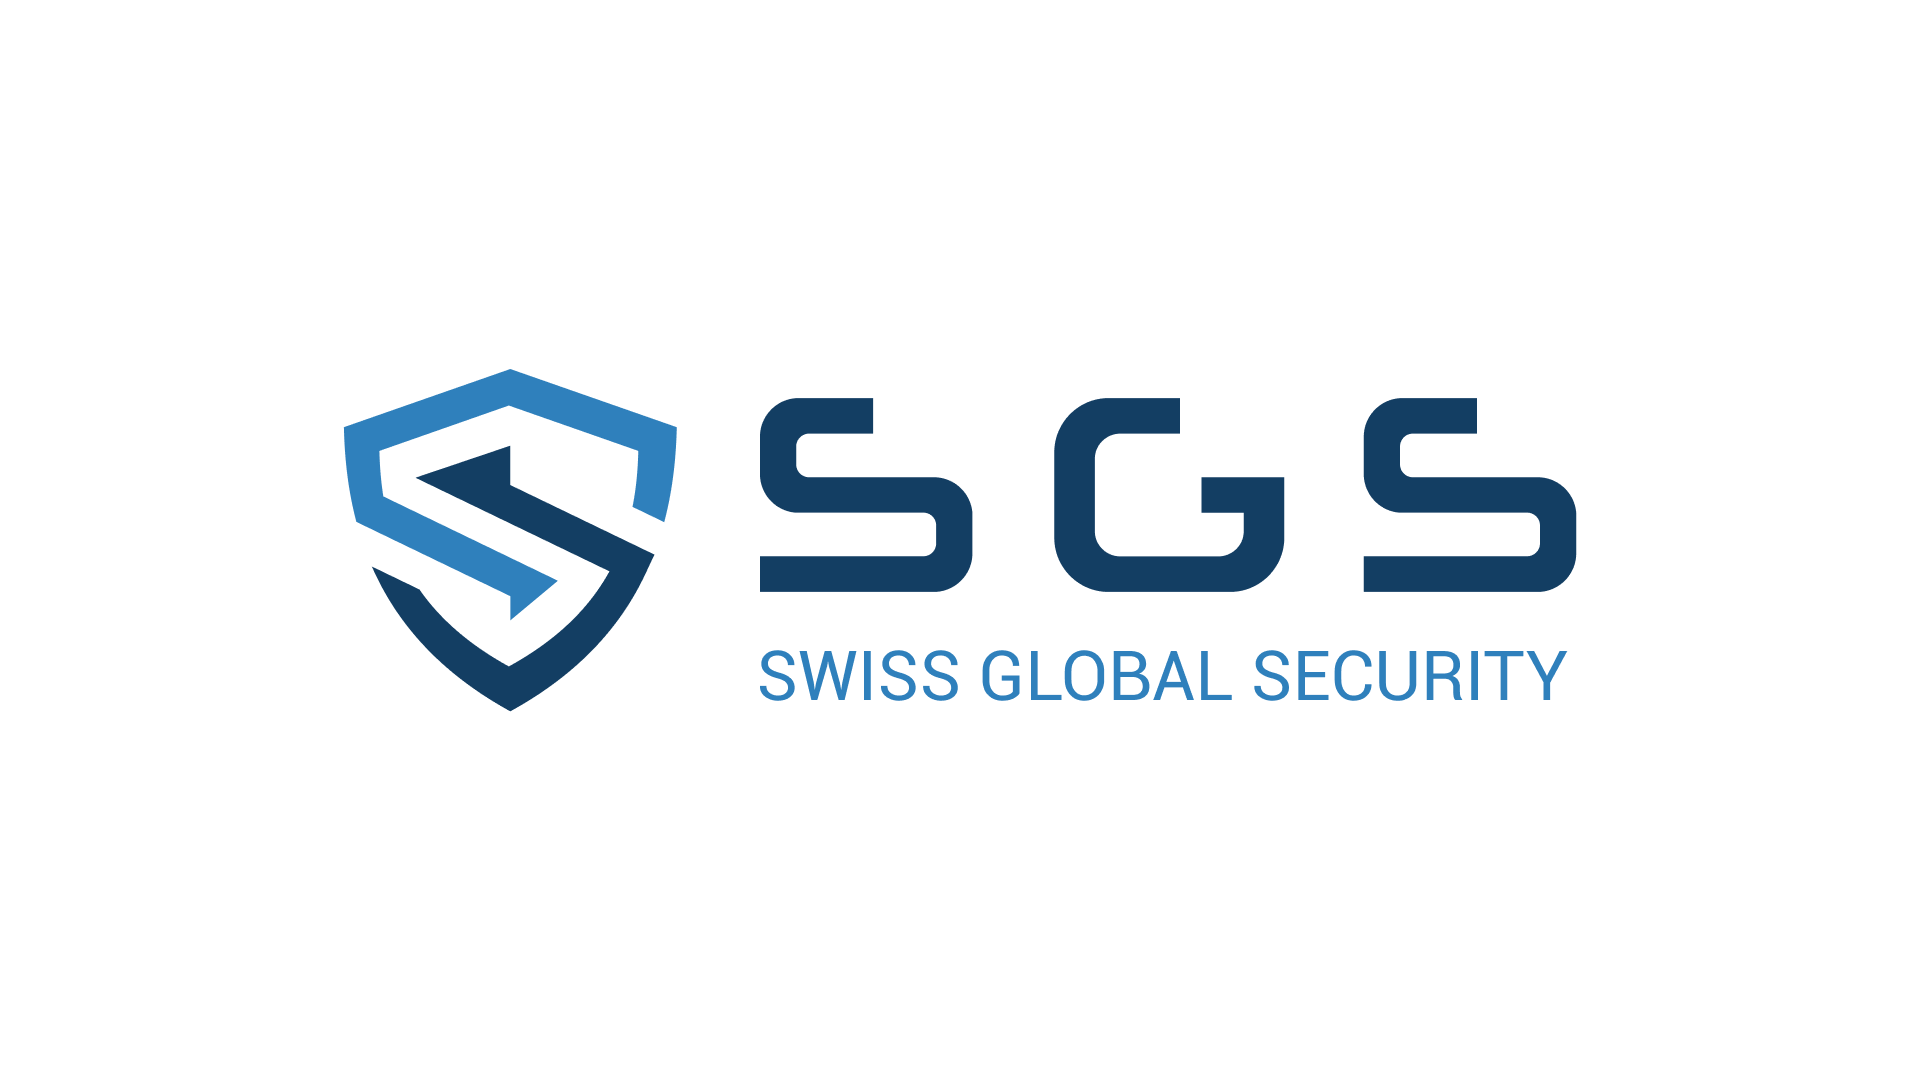 (c) Swissglobalsecurity.com